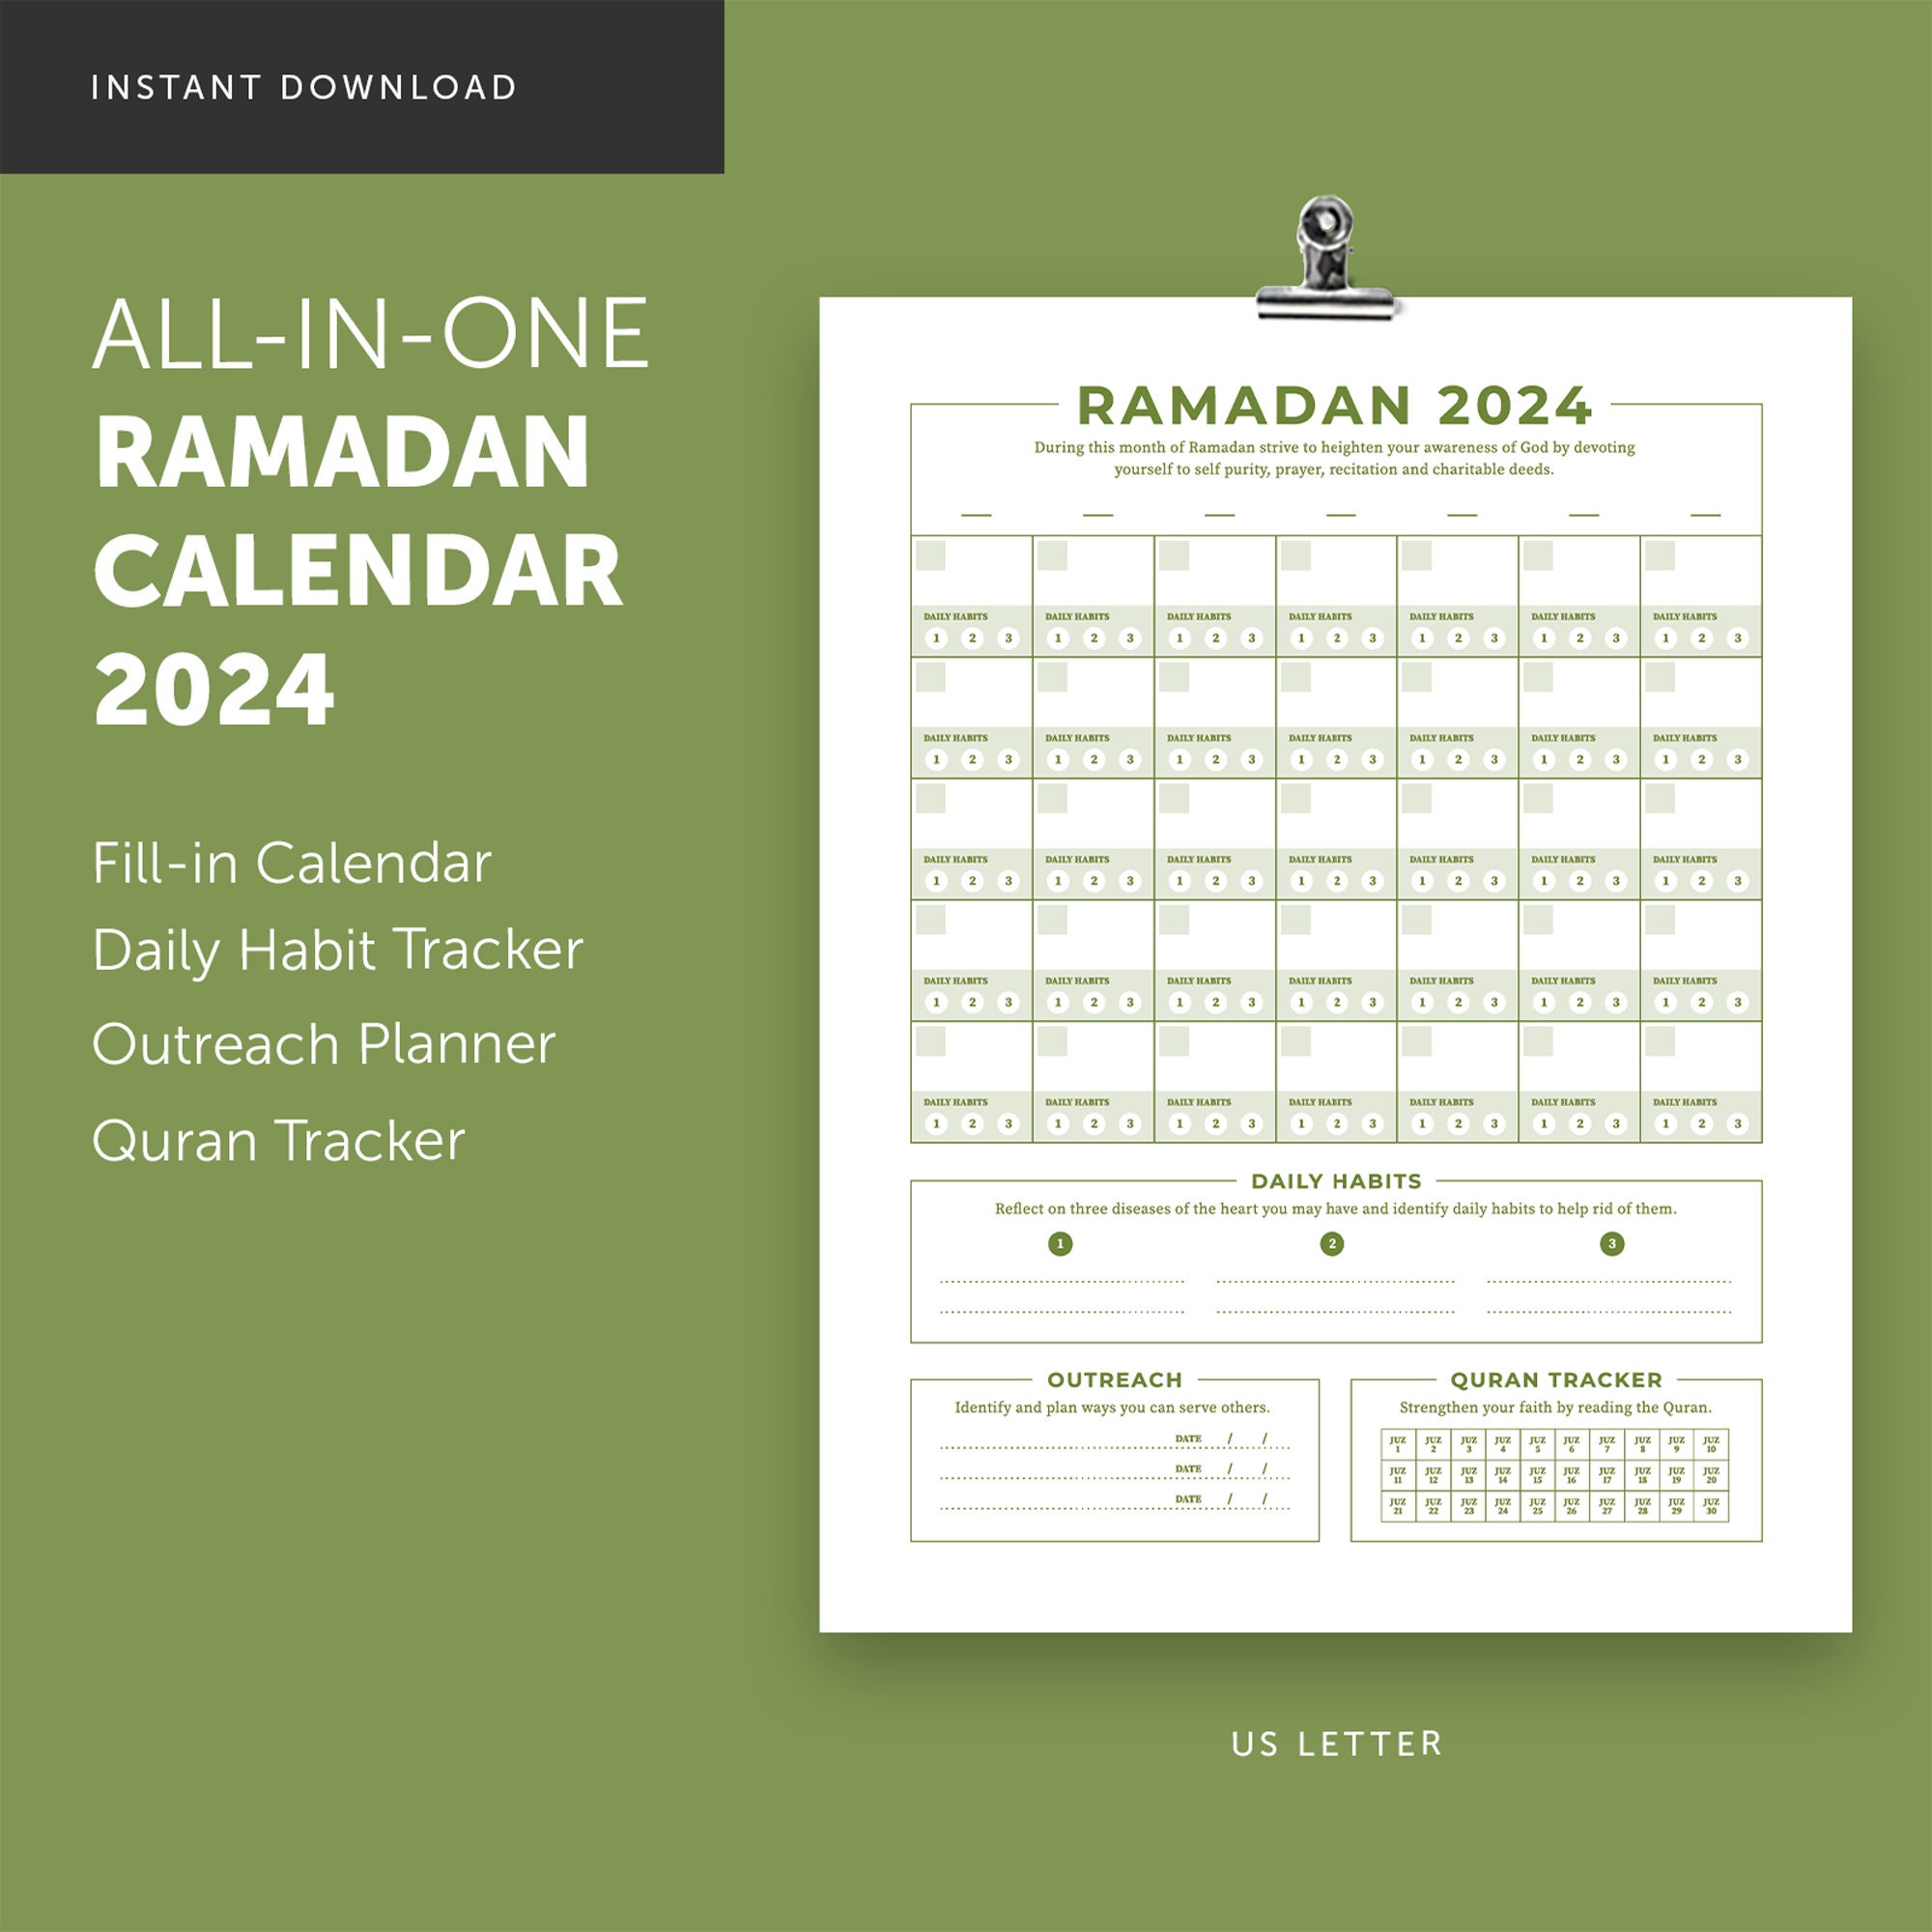 All-in-one Ramadan 2024 Calendar/planner 